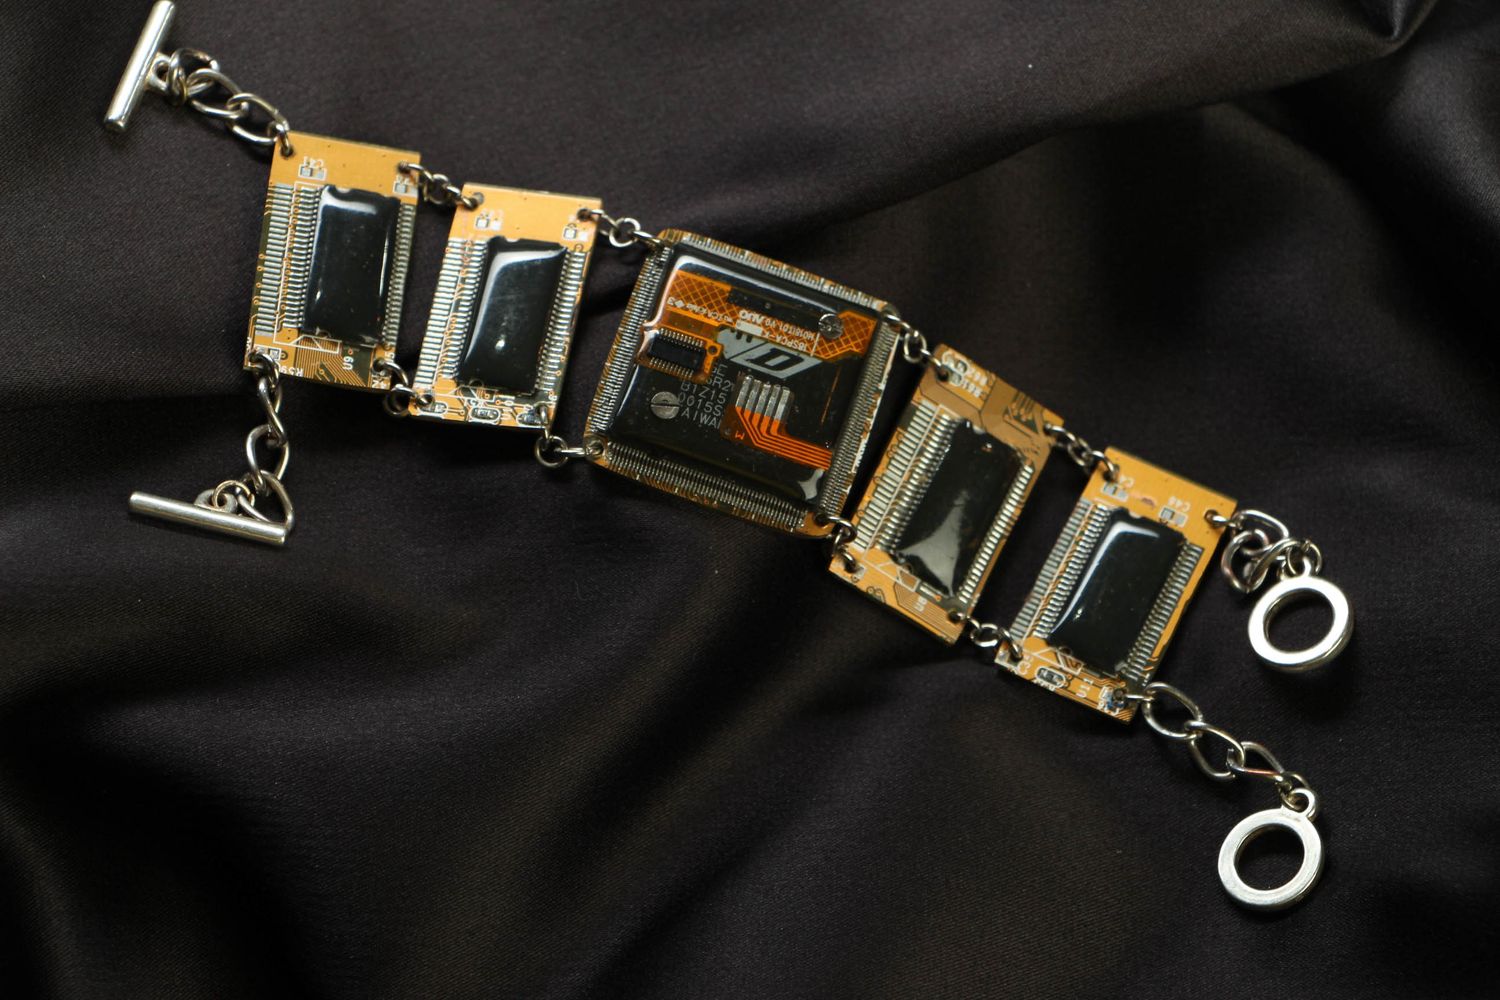 Cyberpunk wrist bracelet photo 1